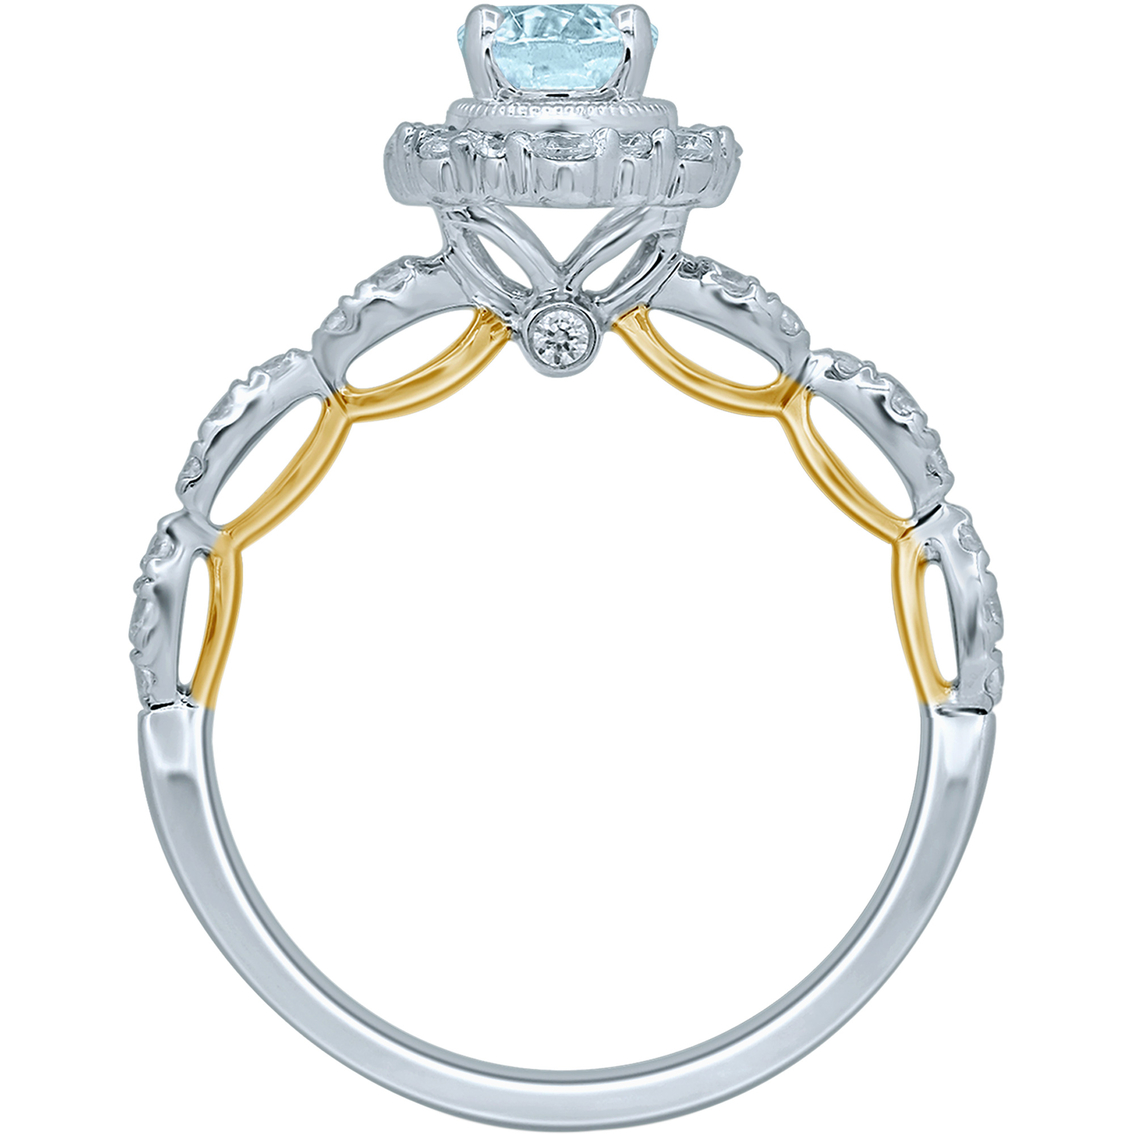 Truly Zac Posen 14K White and Yellow Gold 1 1/4 CTW Aquamarine Engagement Ring - Image 3 of 3